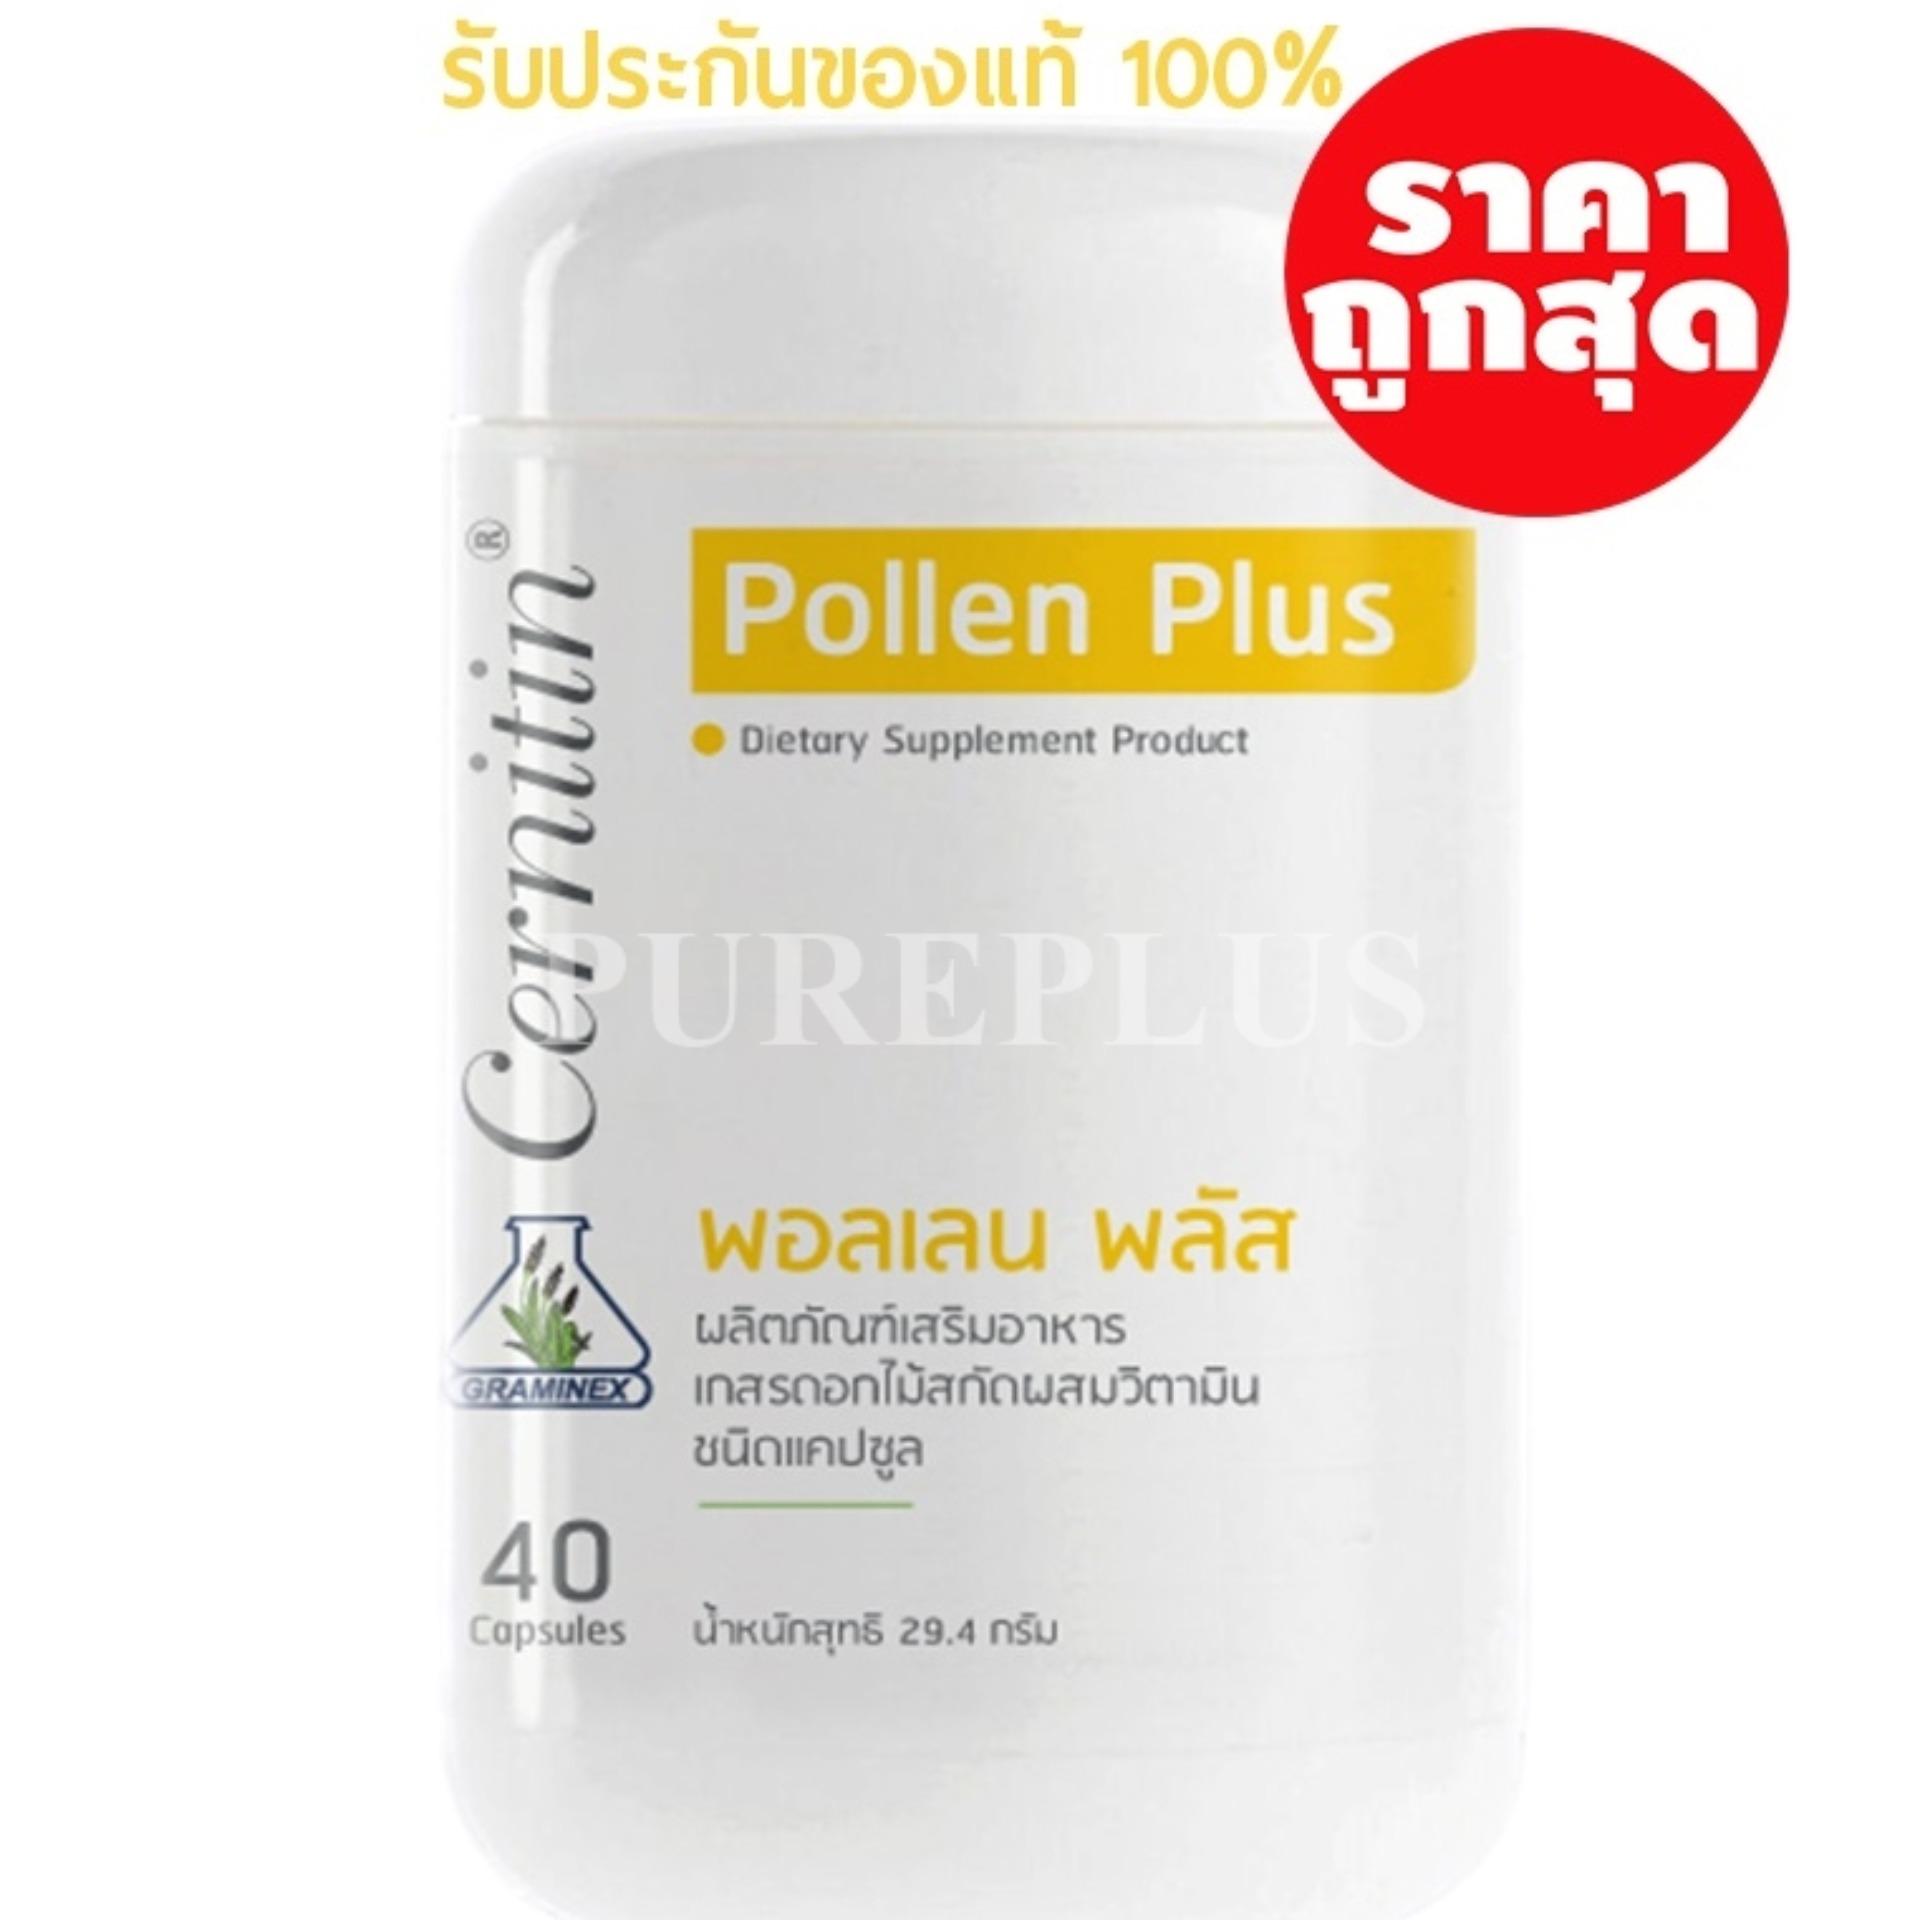 Cernitin เซอร์นิติน - Pollen Plus พอลเลนพลัส (สีเหลือง) ถูกที่สุด! ของแท้ 100%